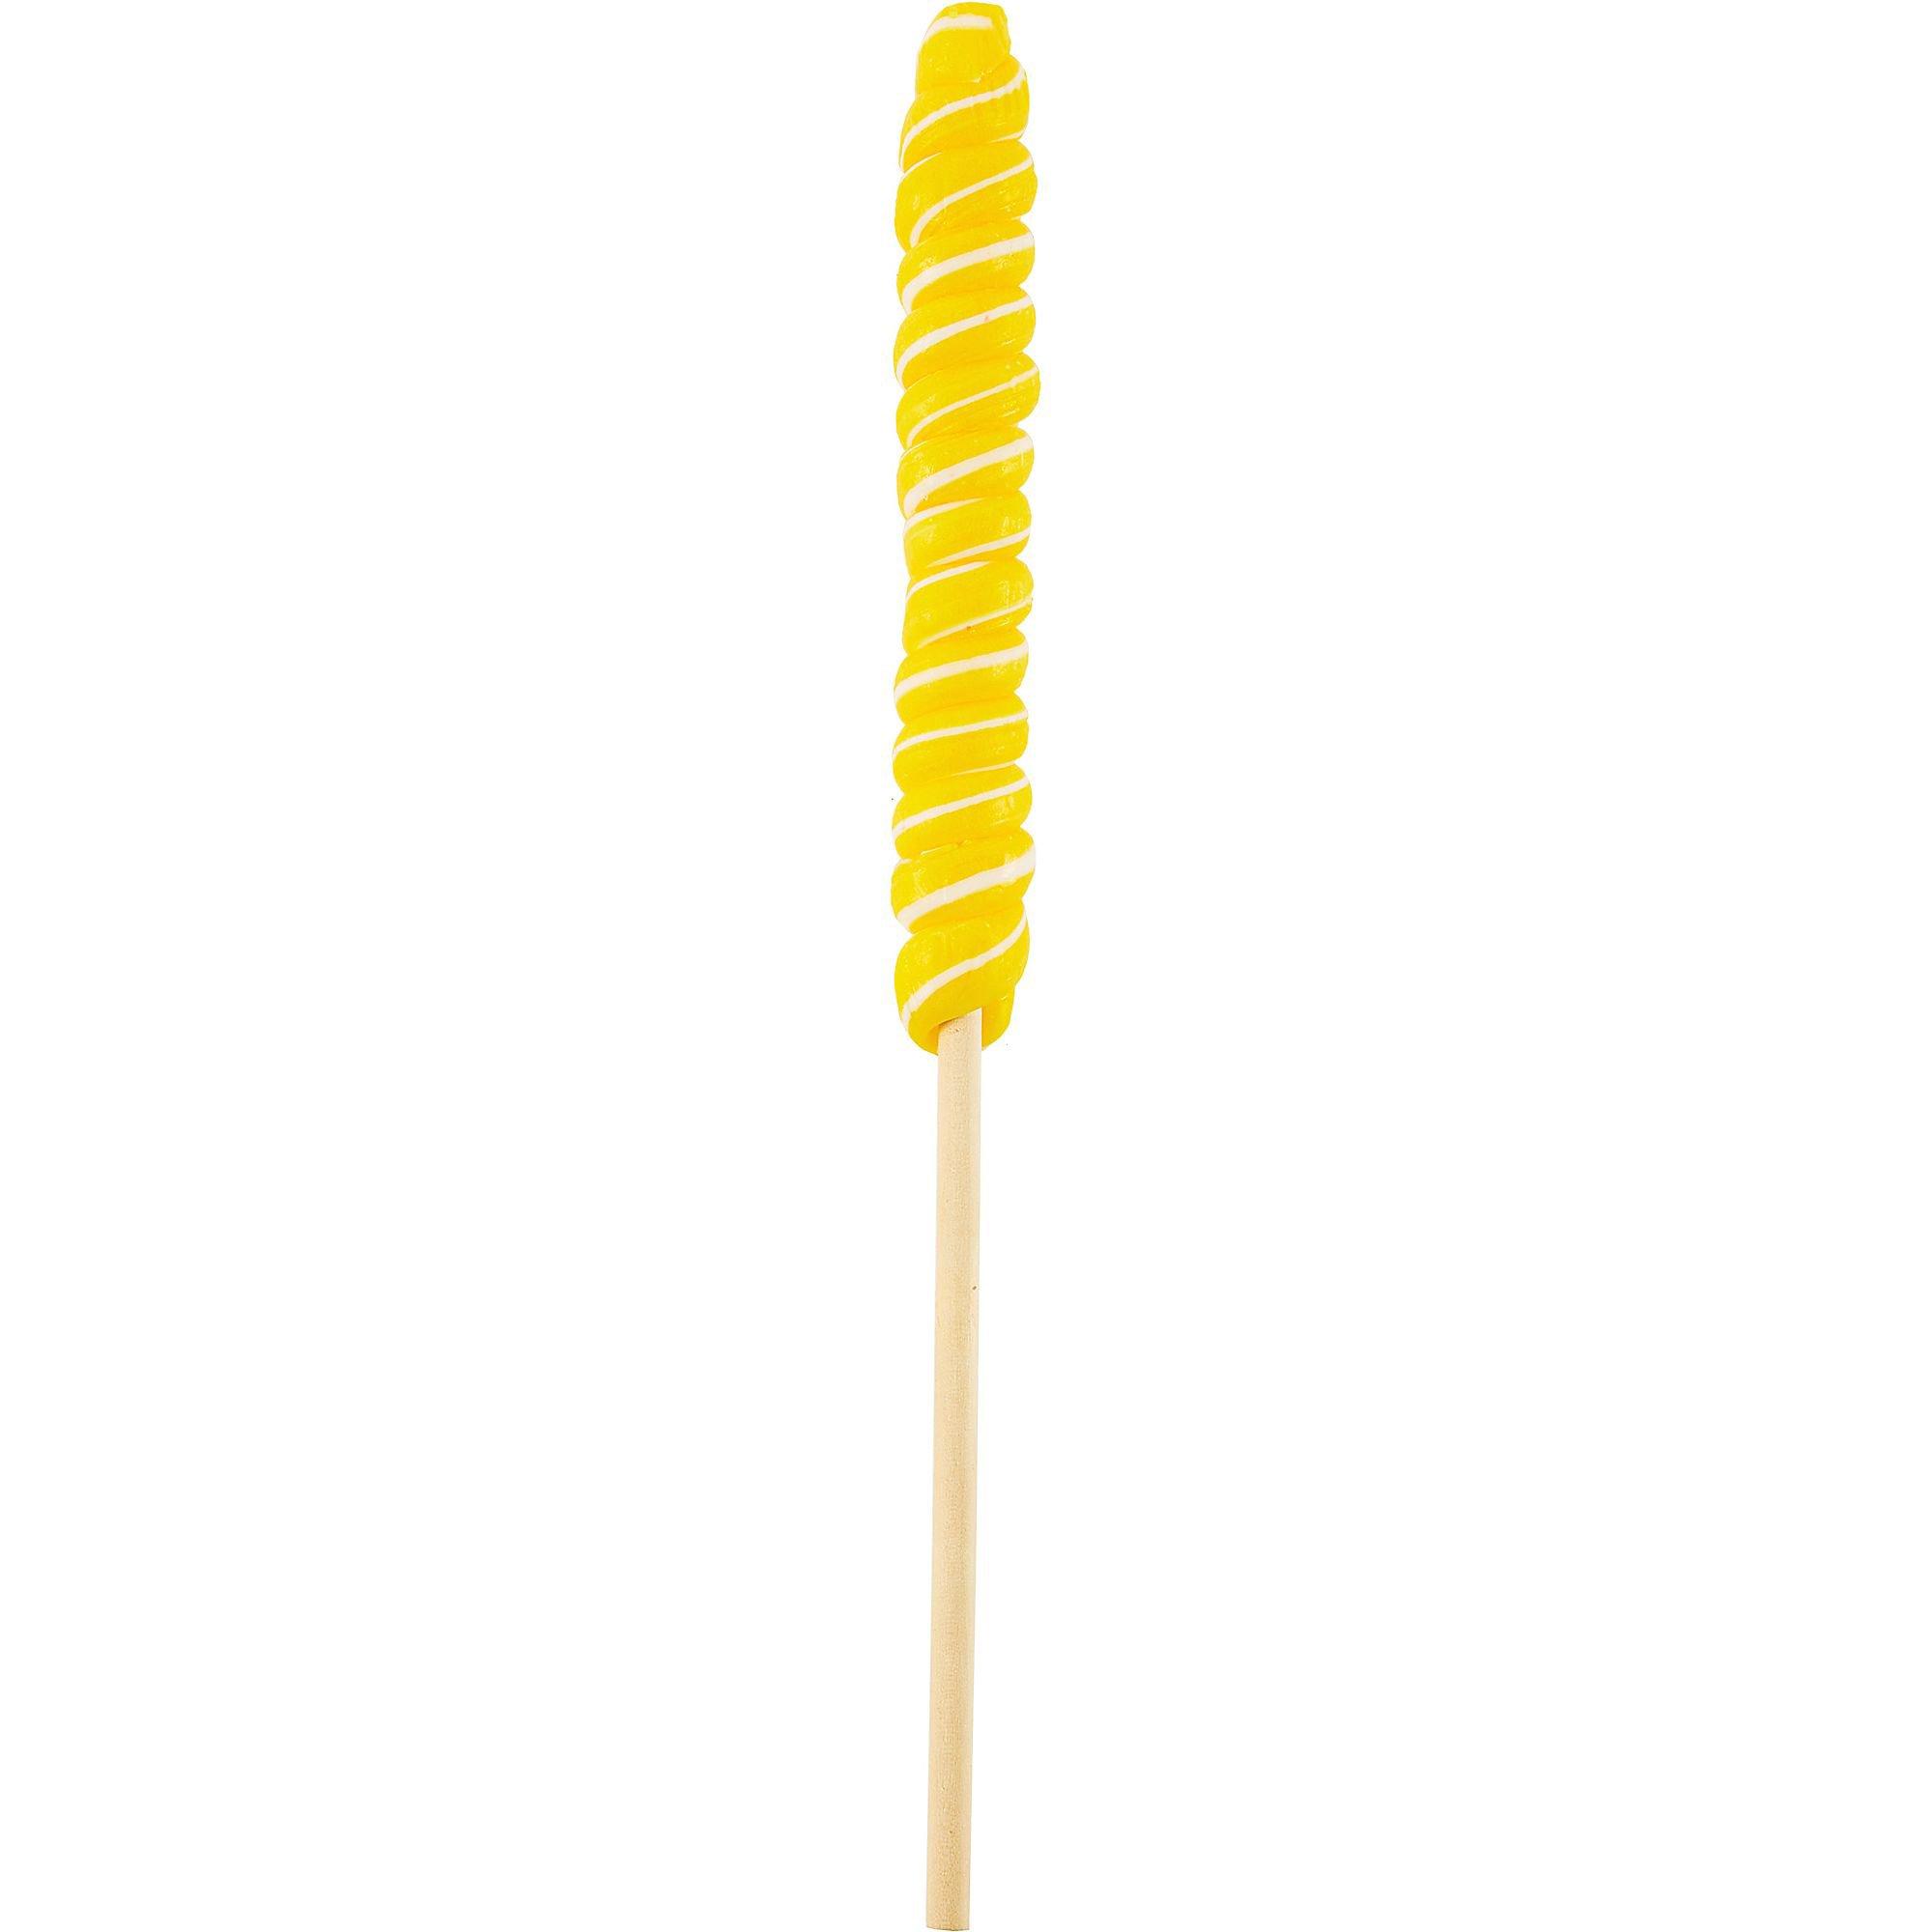 Lollipop sticks 6 inch Yellow (25) - Kiwicakes